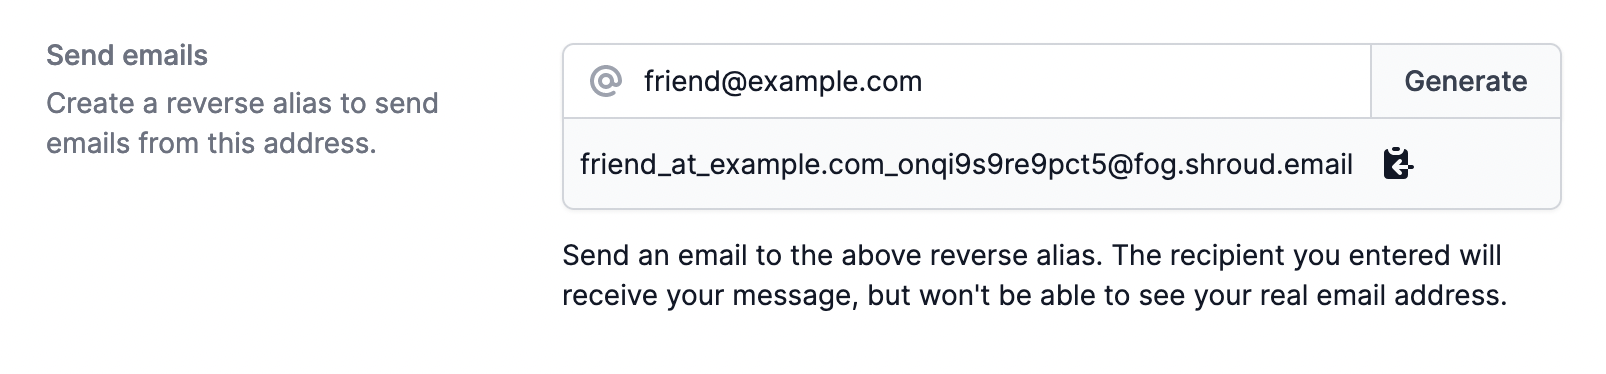 Screenshot of the Shroud.email UI to generate a reverse alias